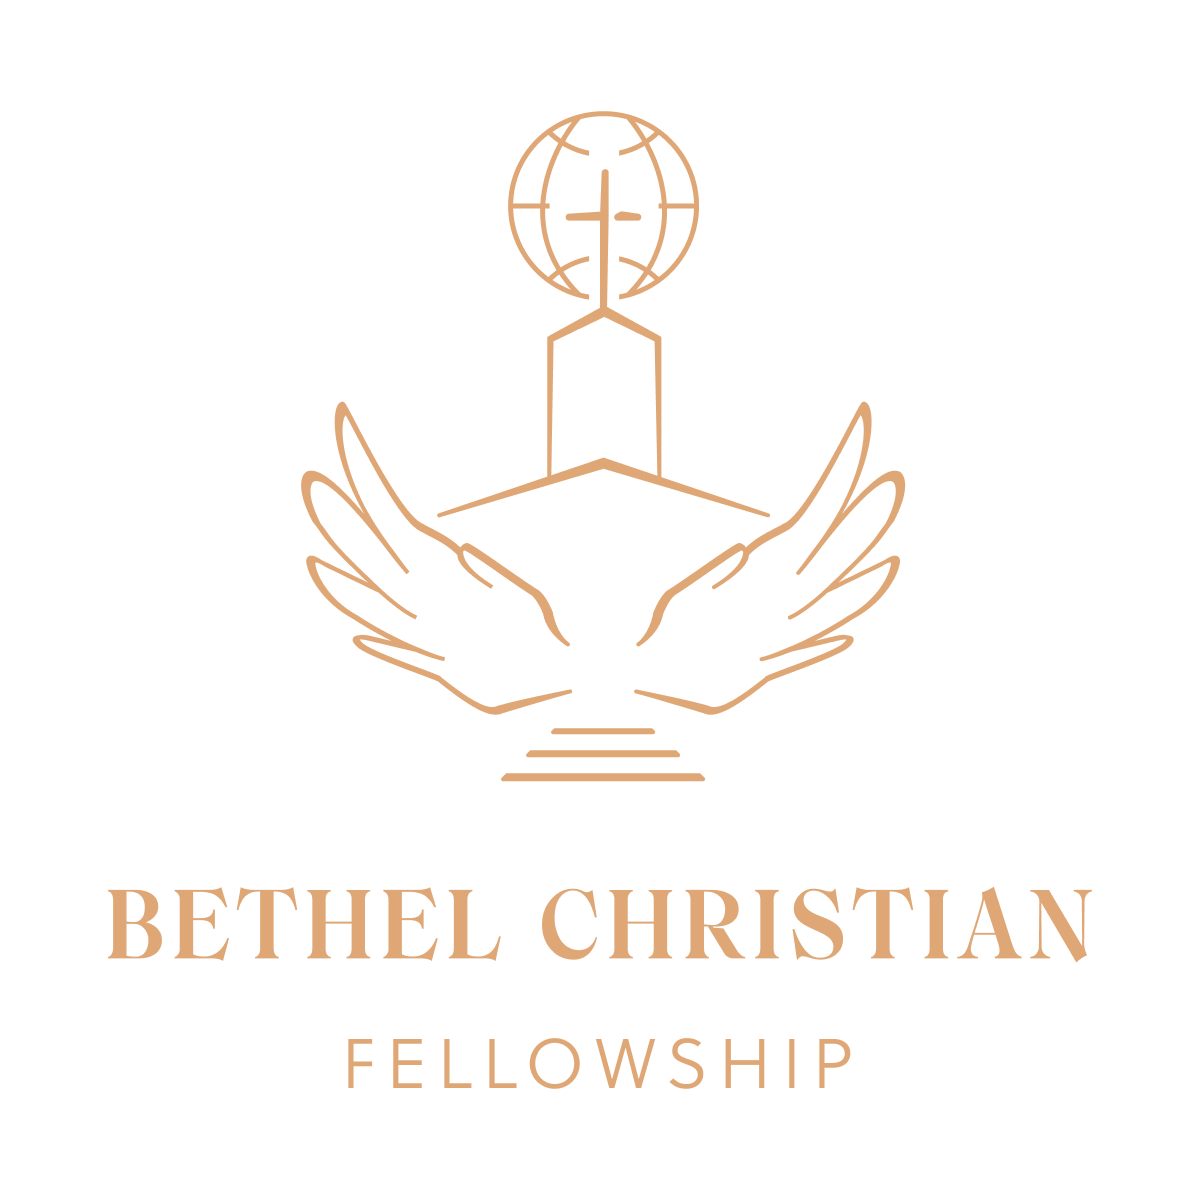 Bethel Christian Fellowship